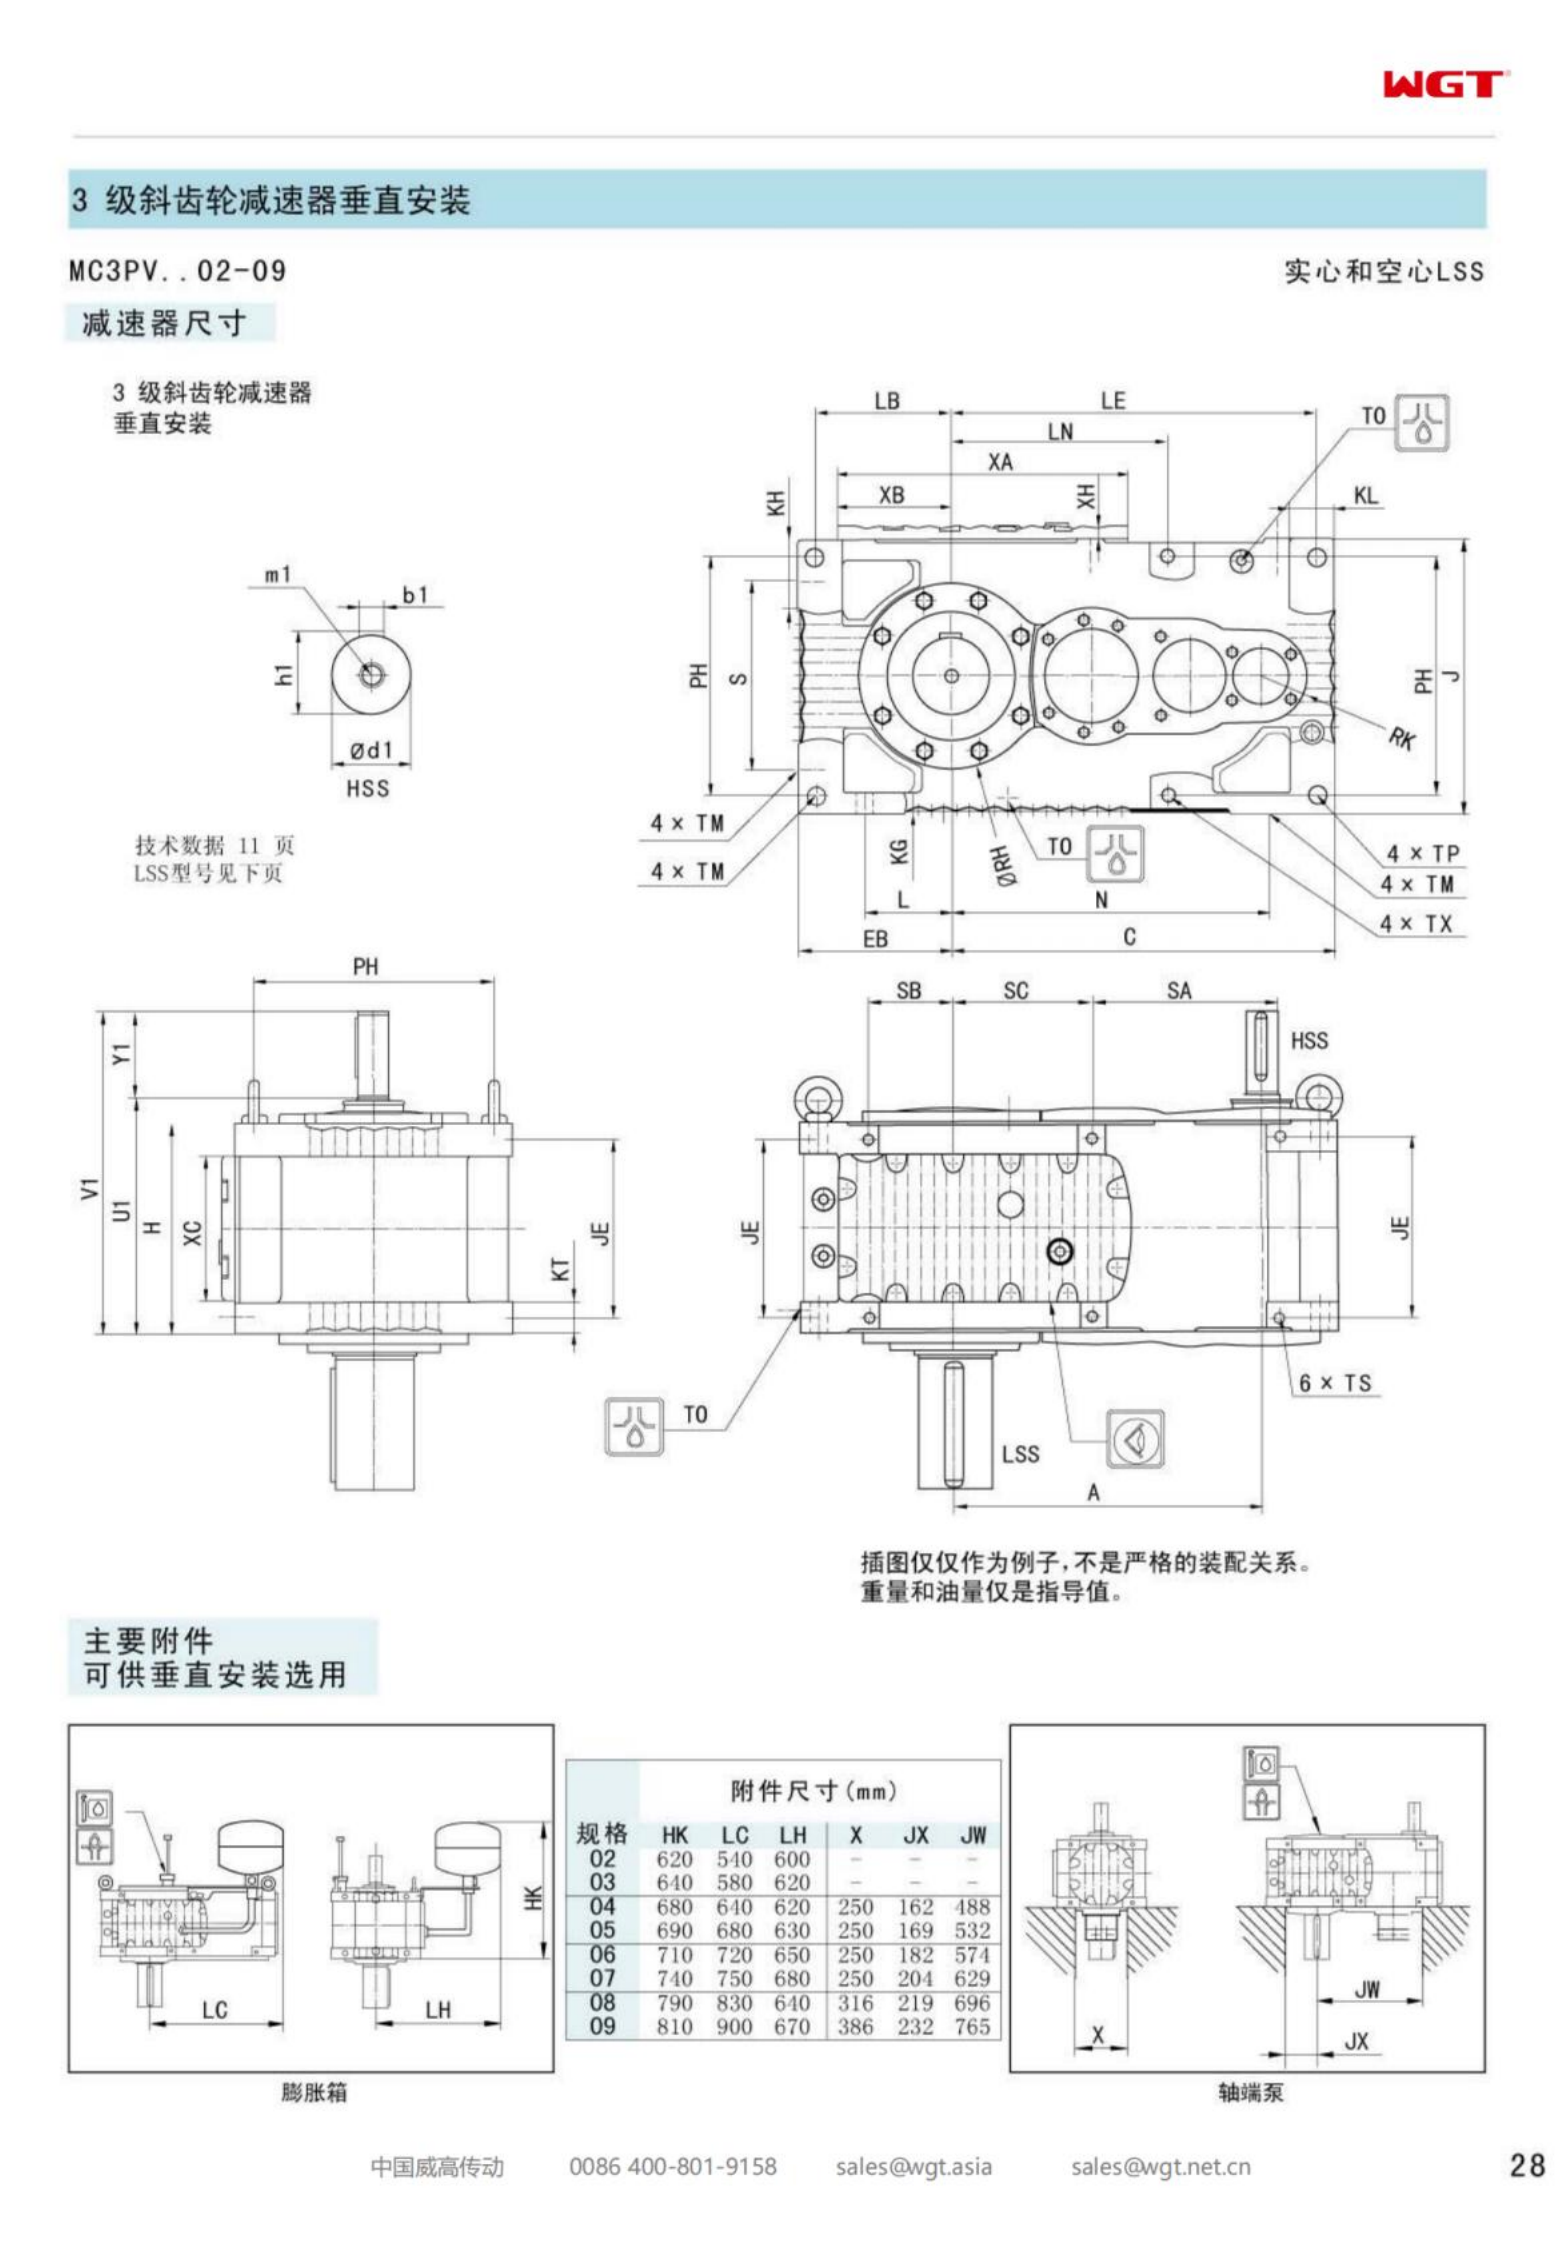 MC3PVHF07 replaces _SEW_MC_Series gearbox (patent)